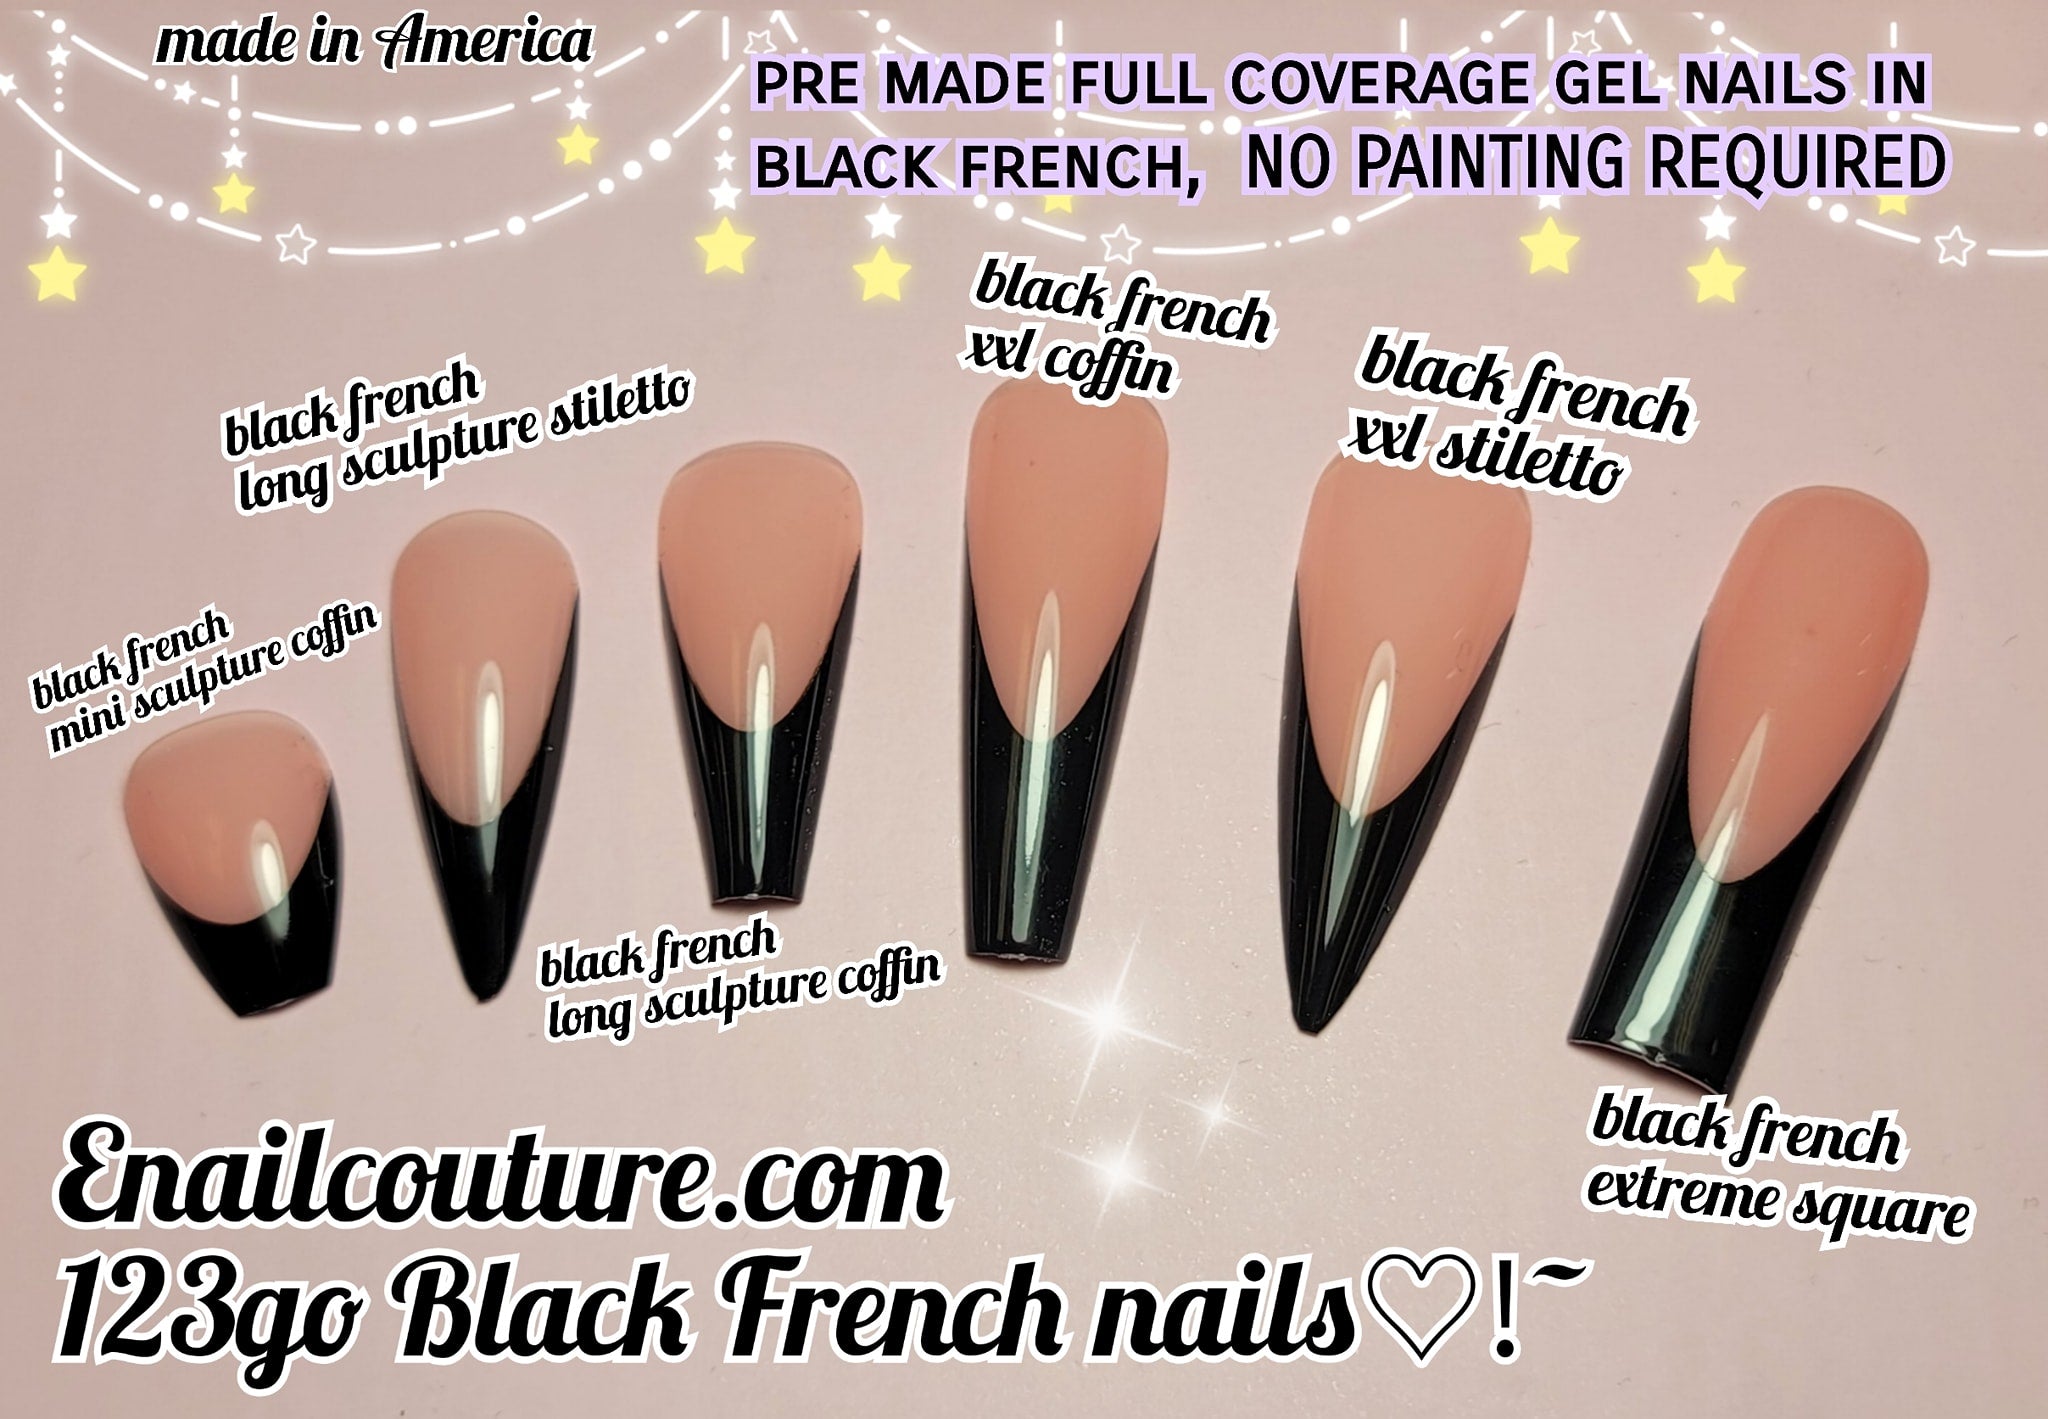 Black French 123 Go! Nails (pre made full coverage gel nail tips) (Full Cover False Nail Artificial Gel Nails Tip, False Nails)